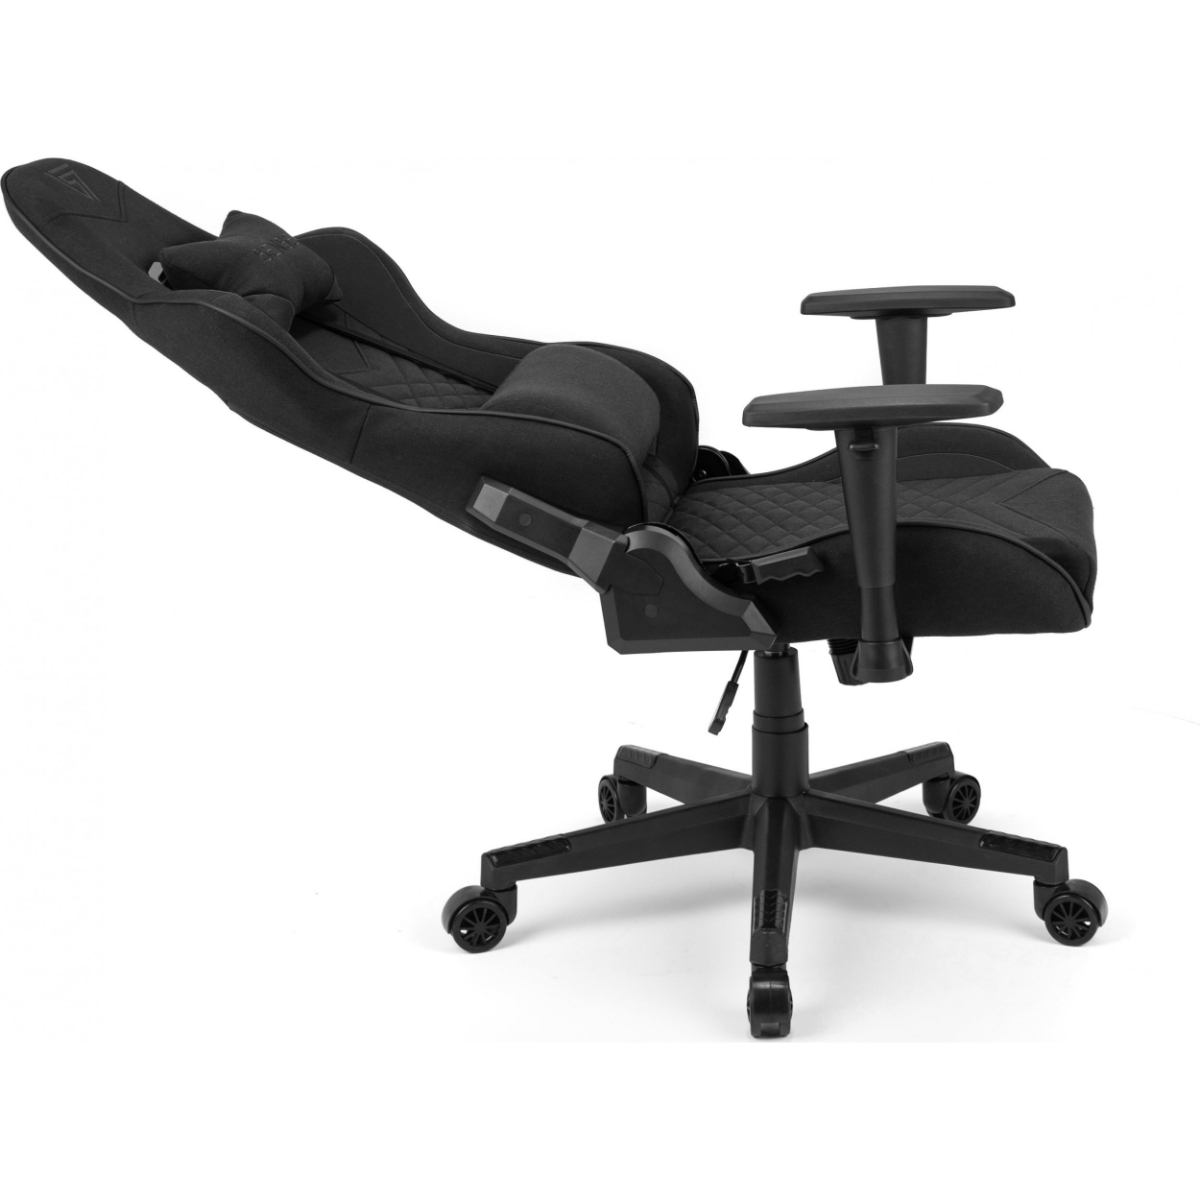 SENSE7 Spellcaster Fabric schwarz Stühle, Gaming